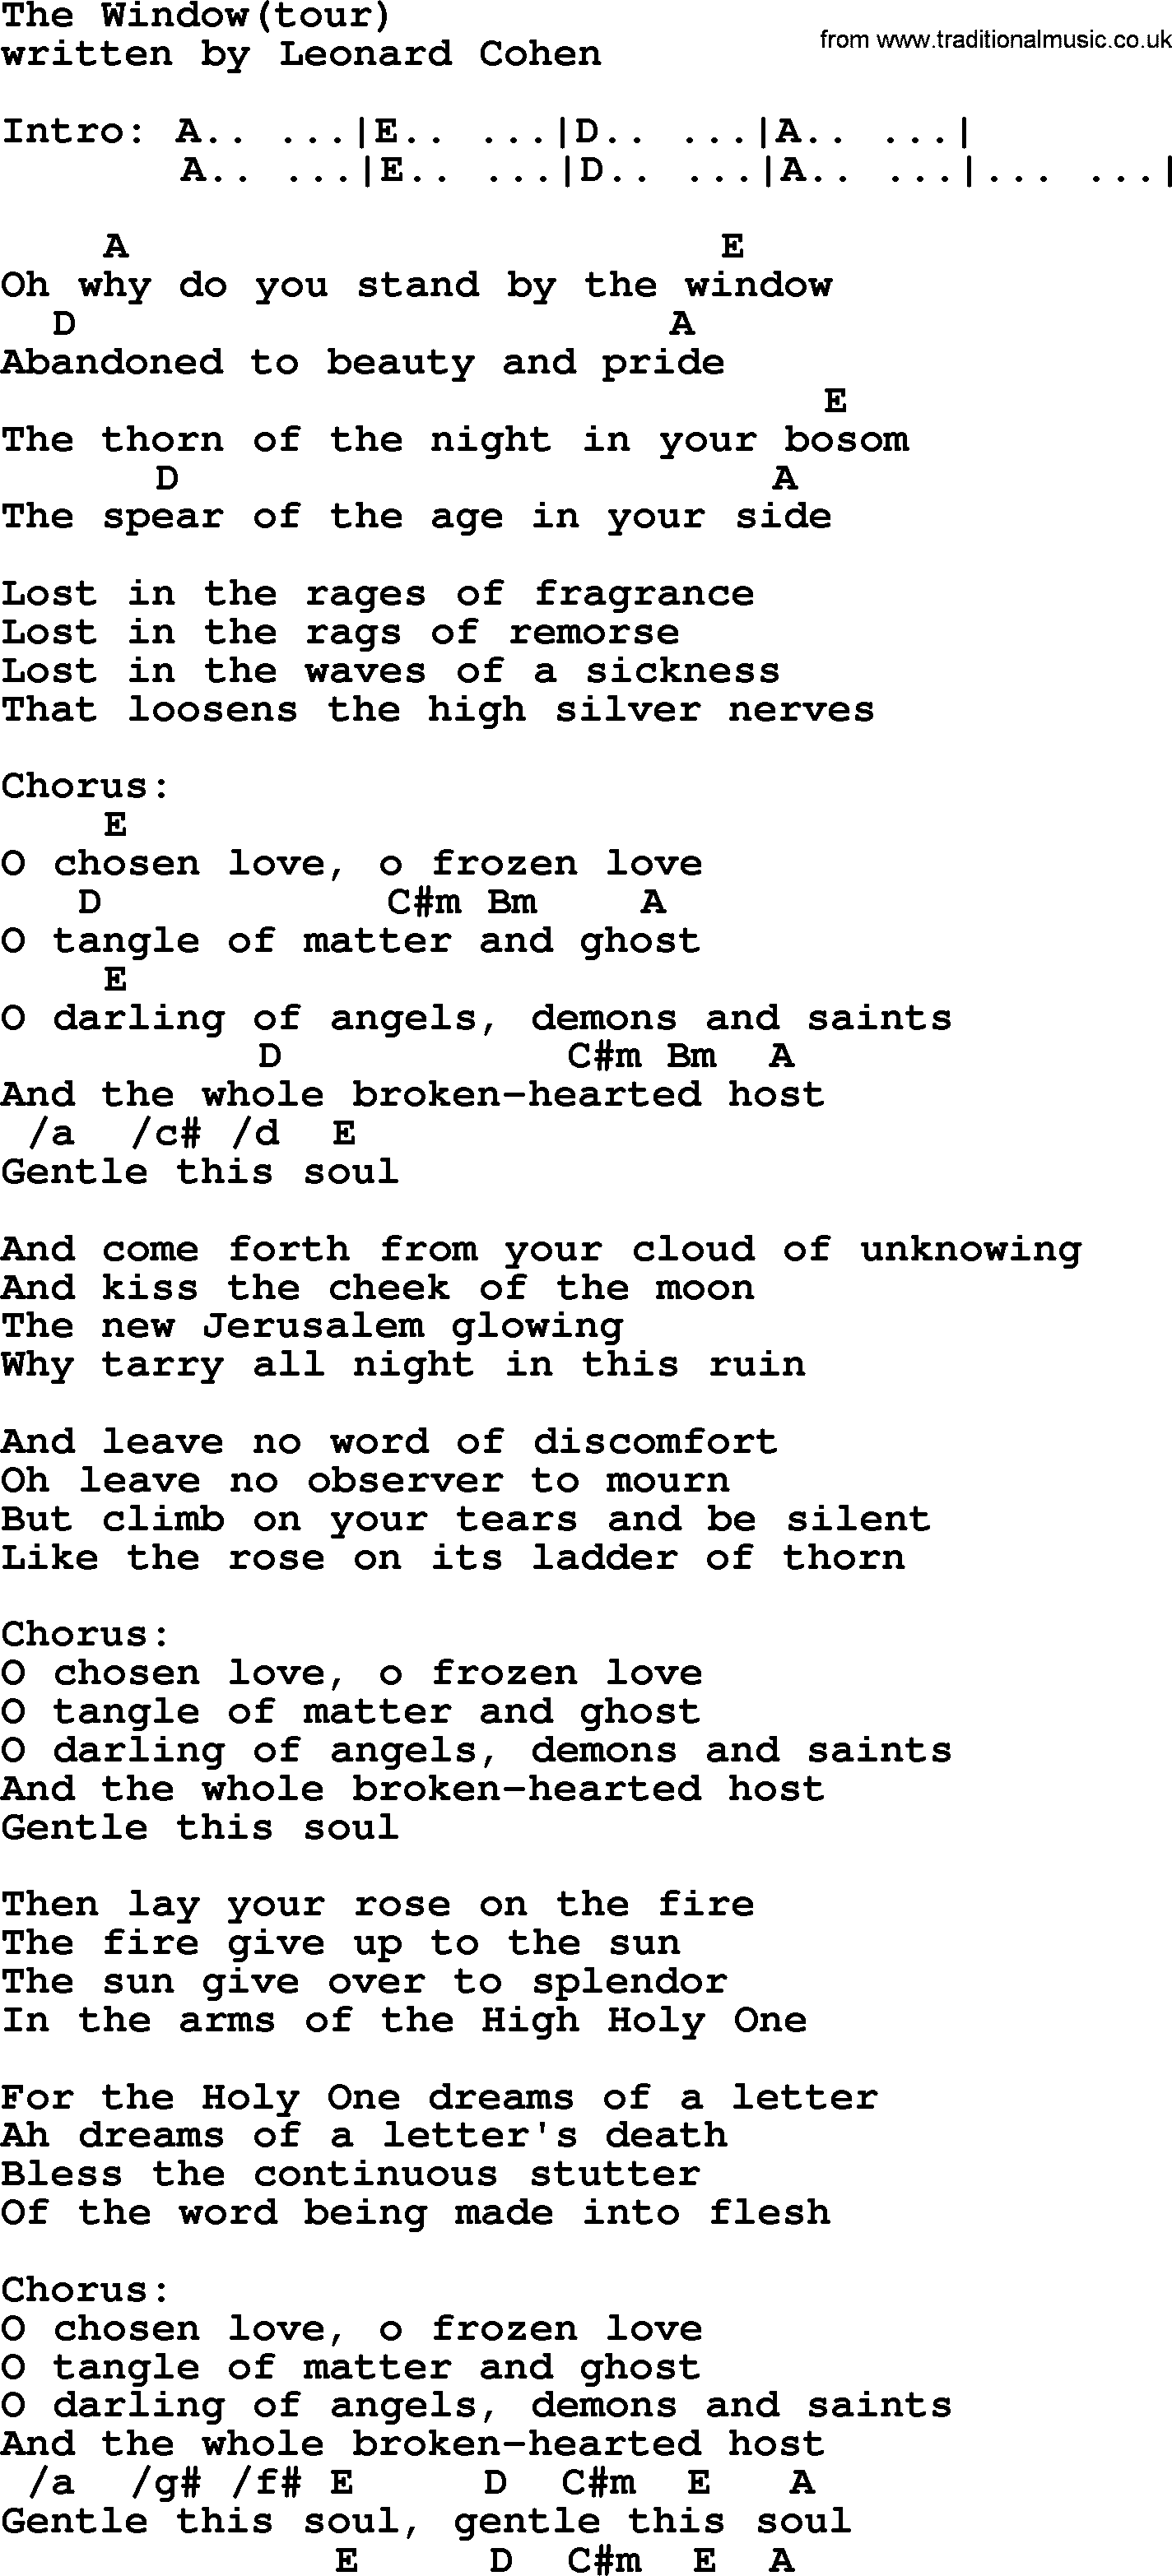 Leonard Cohen song The Window(tour), lyrics and chords